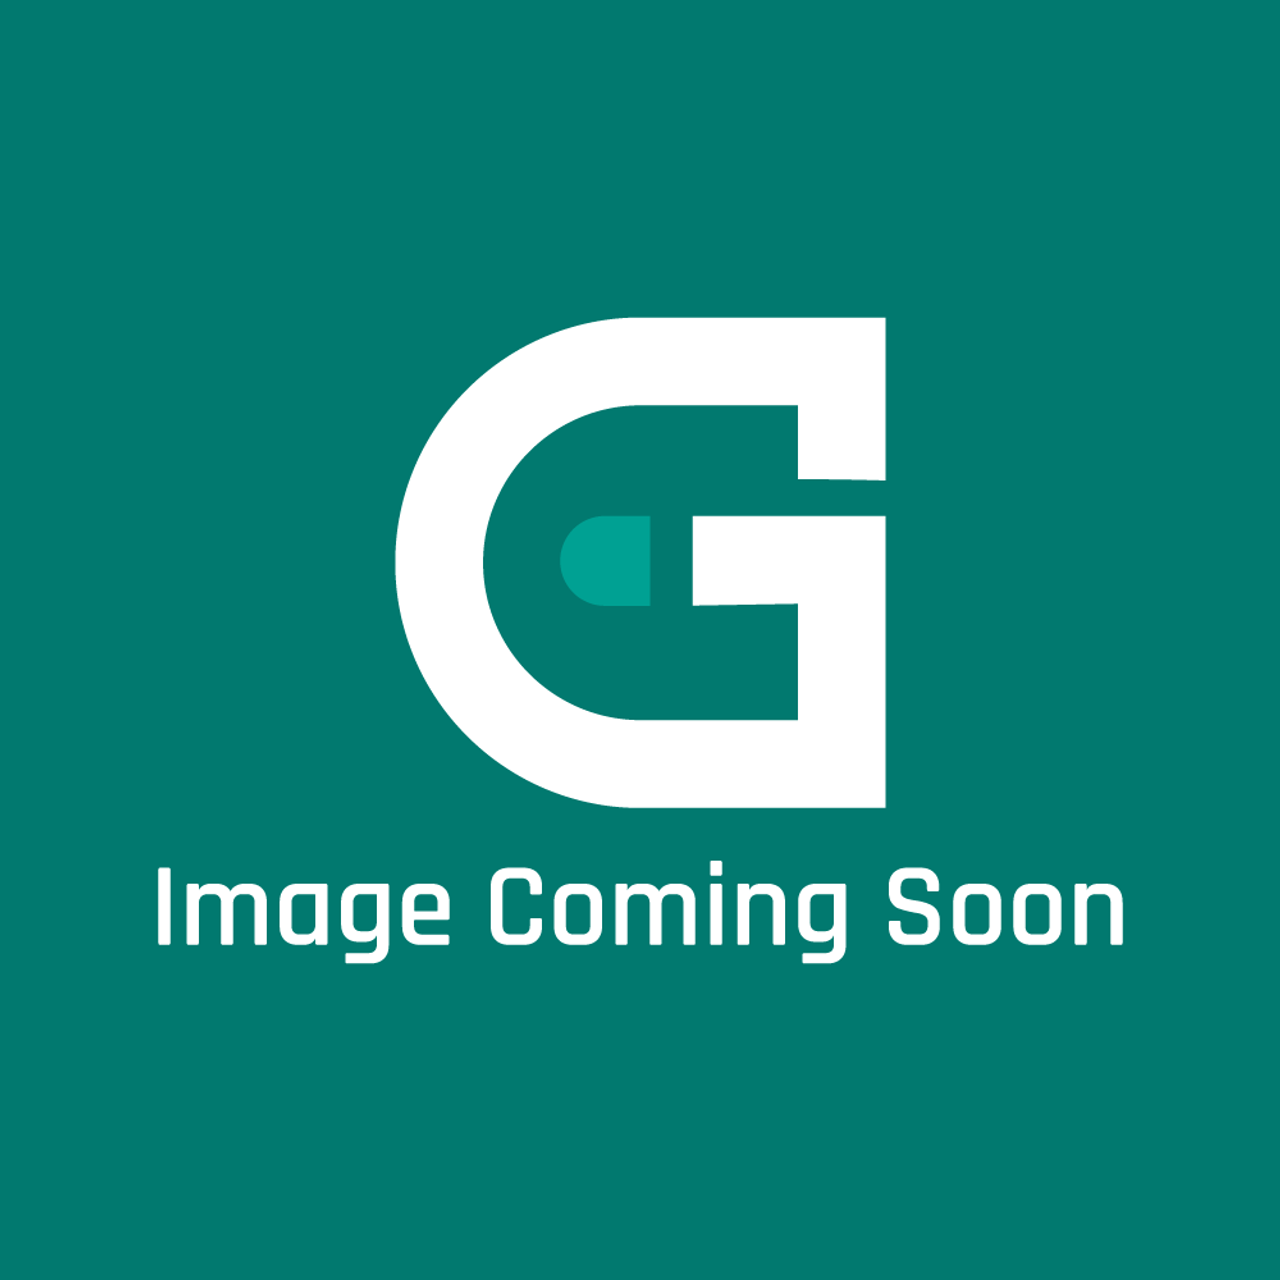 Frigidaire - Electrolux 316453043 Dsp Glassassem. - Image Coming Soon!